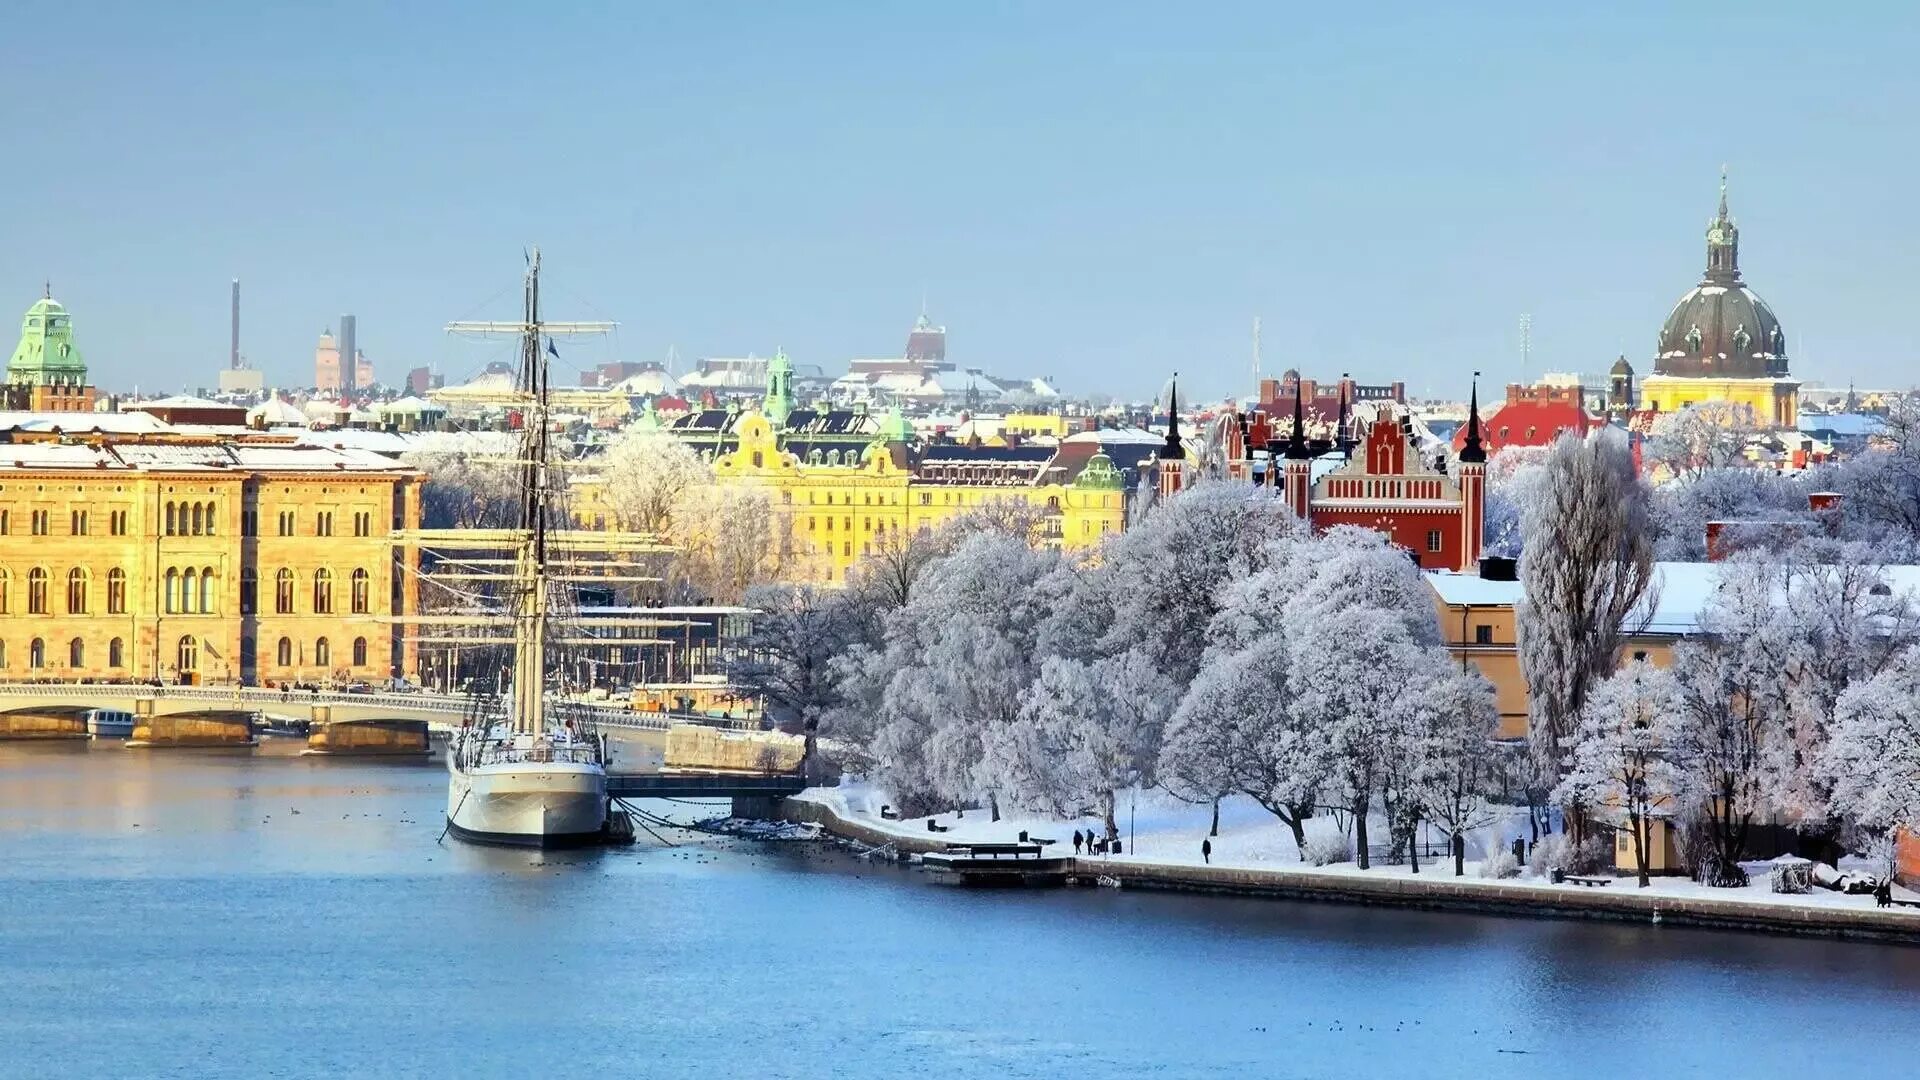 Хельсинки температура. Швеция Стокгольм. Стокгольм Швеция зима. Хельсинки Финляндия Стокгольм. Зимний Хельсинки.